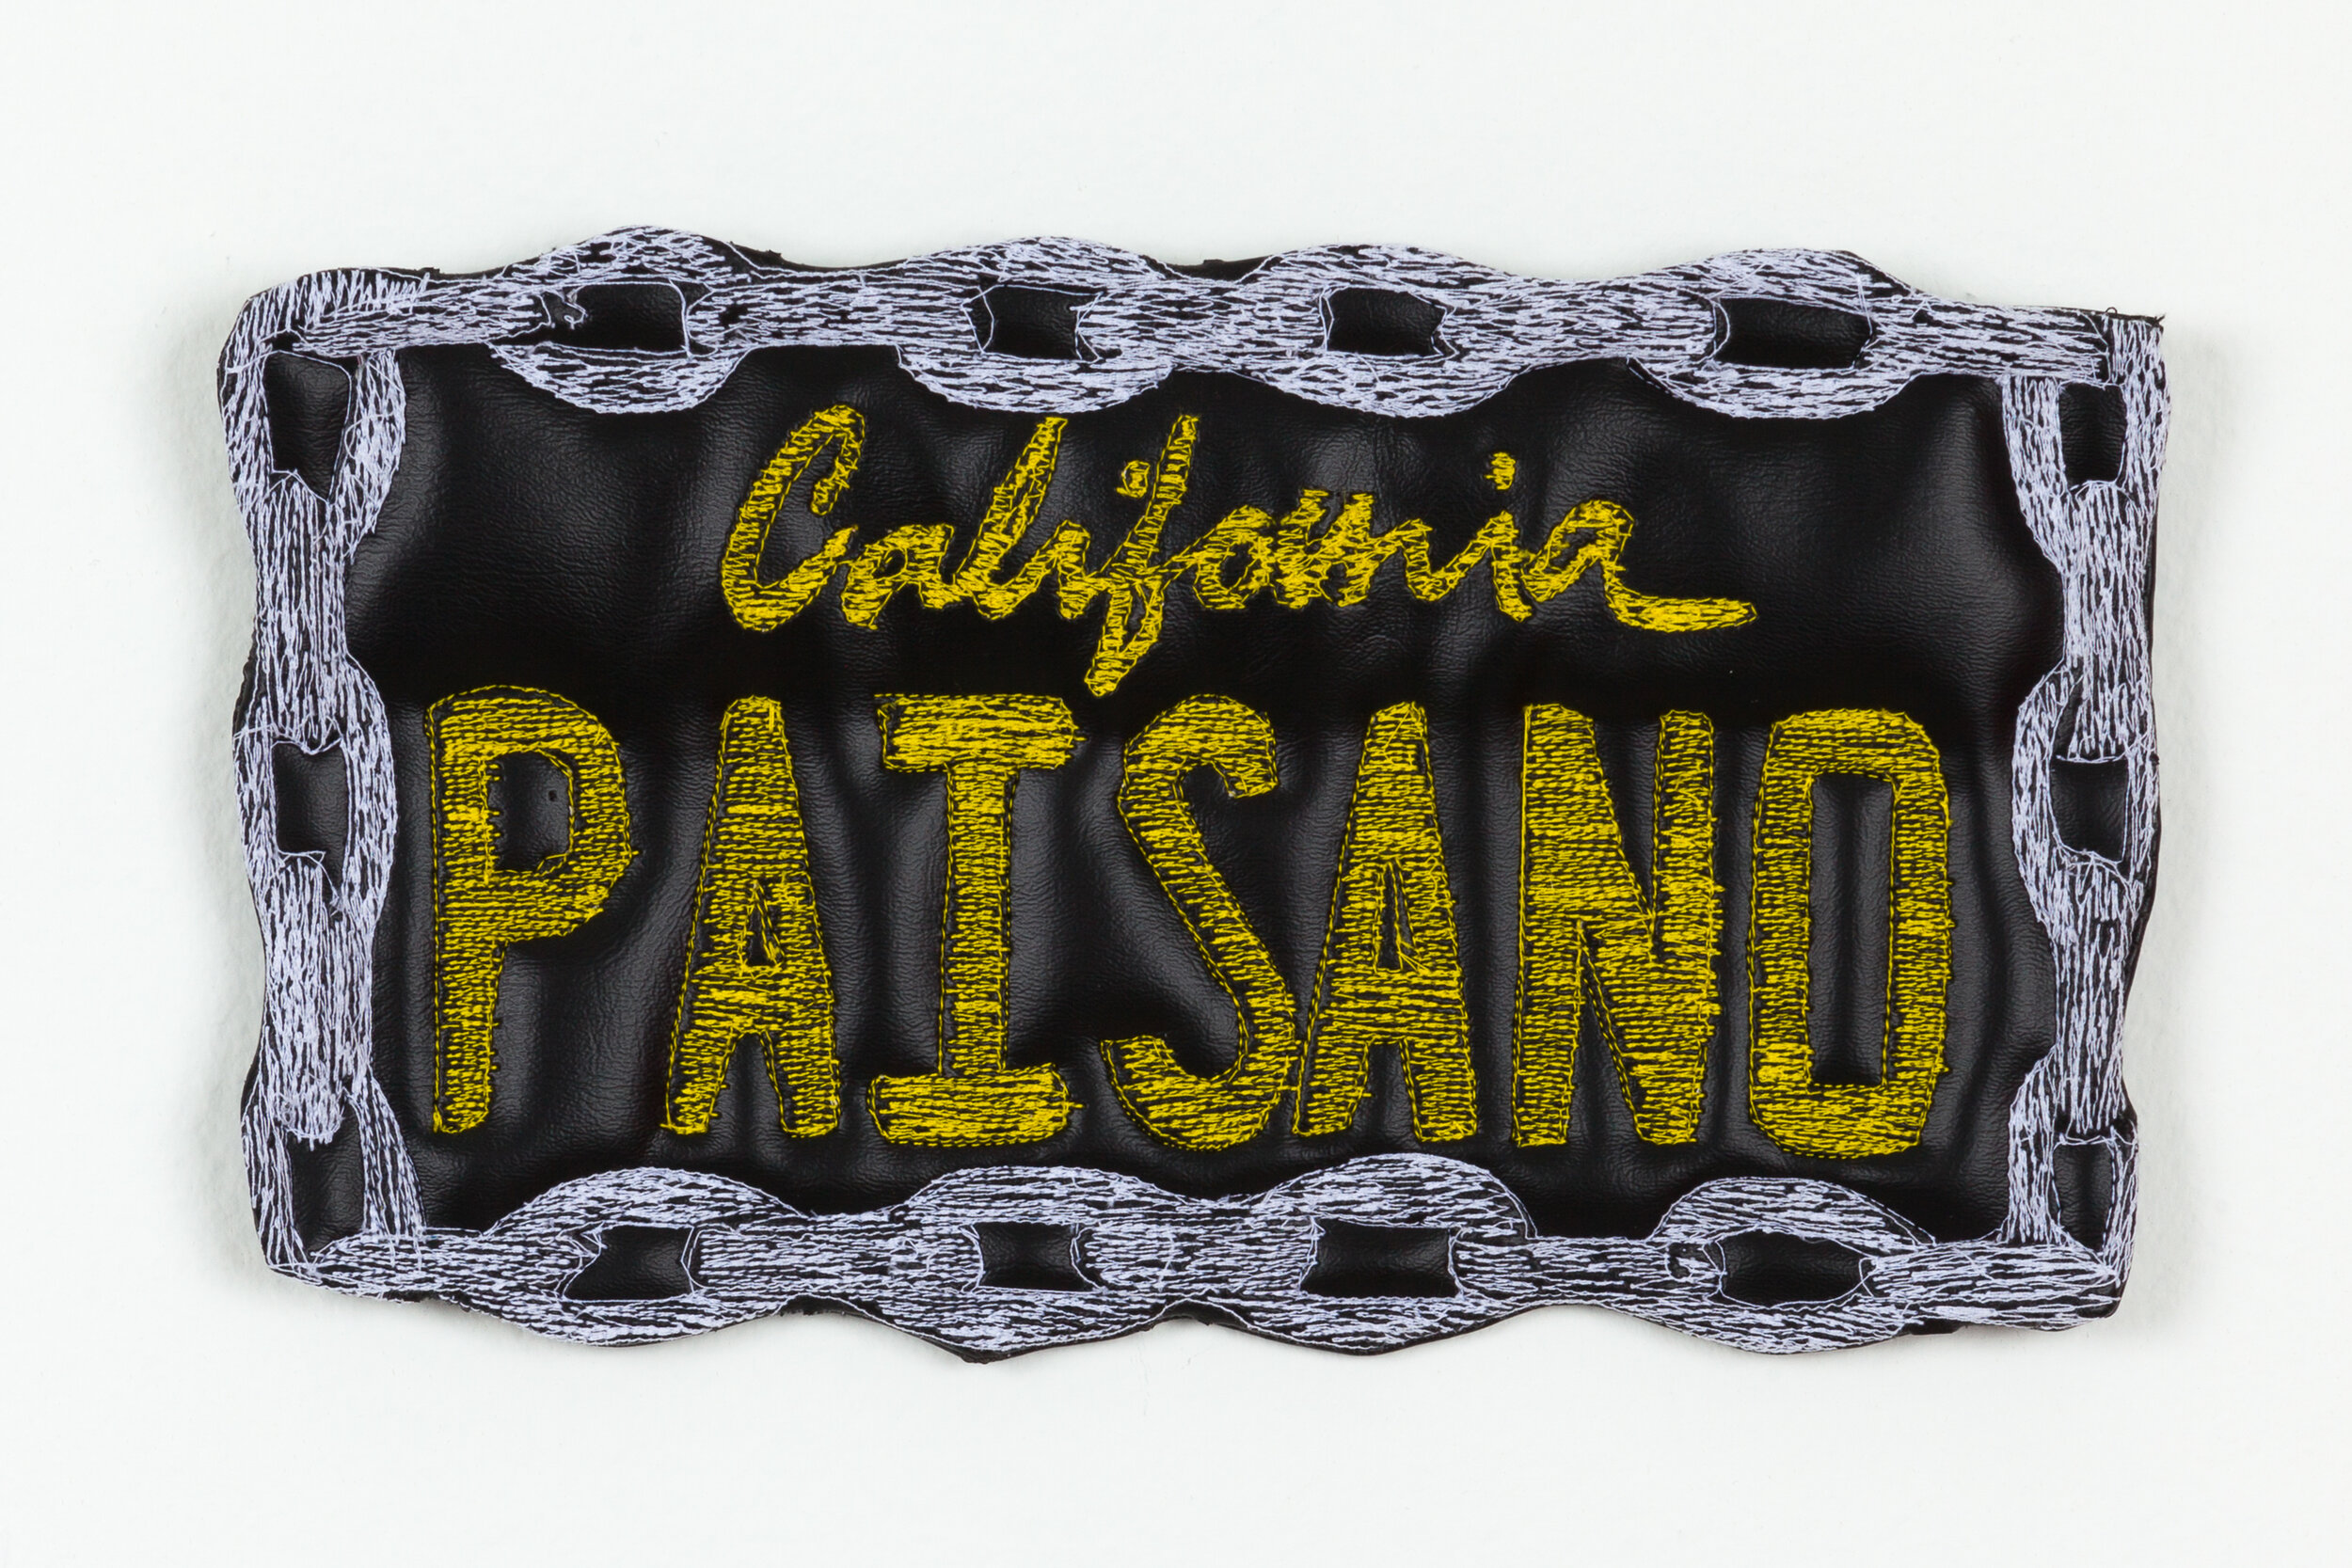  Paisano, 2020  faux leather, thread, polyurethane foam, hardware  7.5x12 inches   